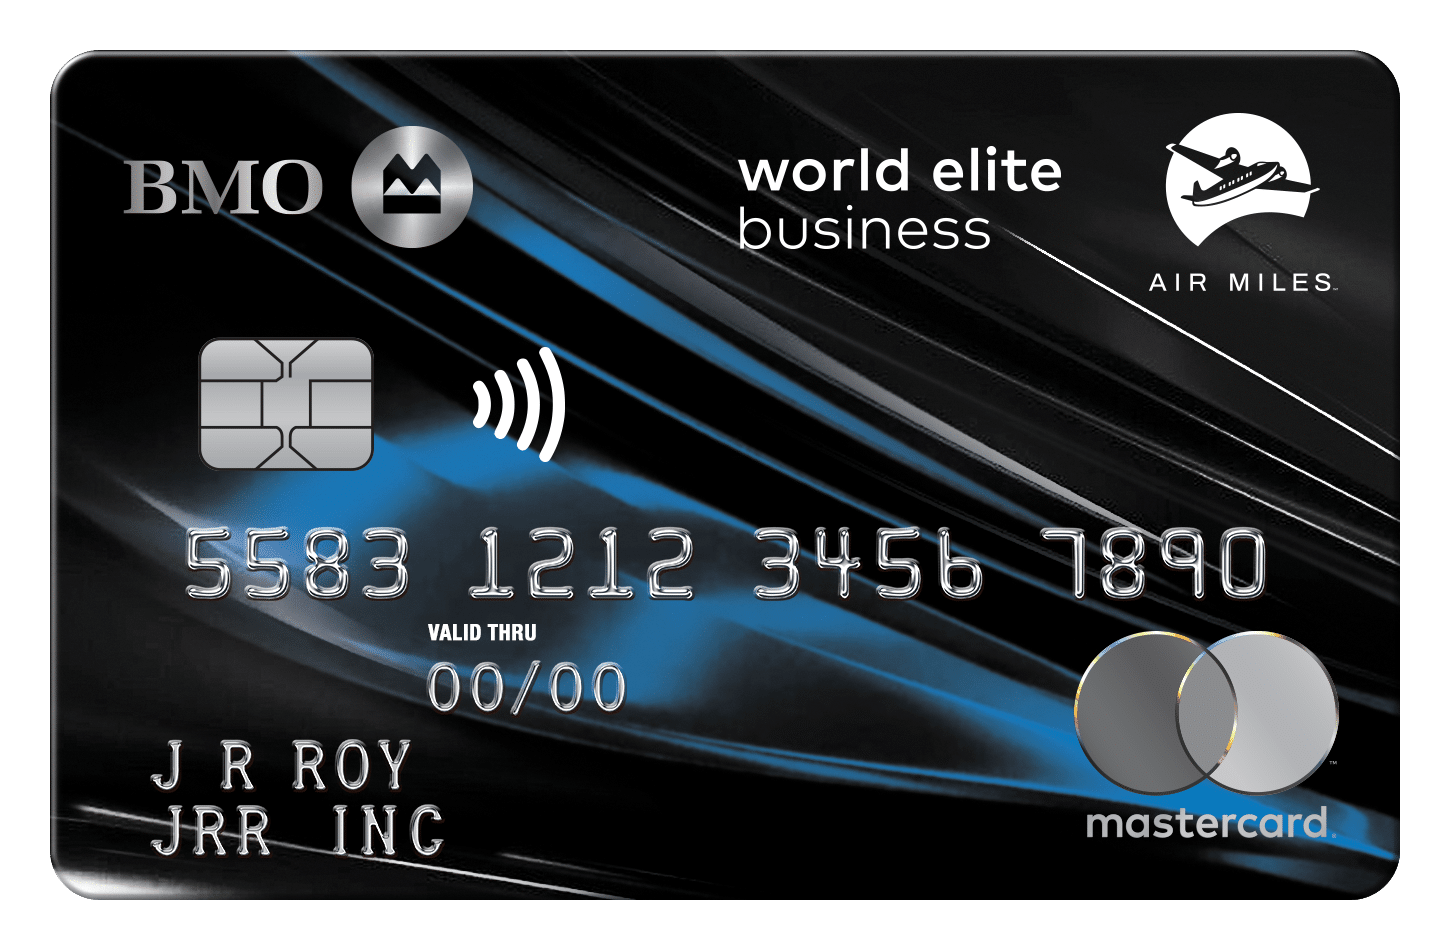 bmo world elite mastercard travel benefits